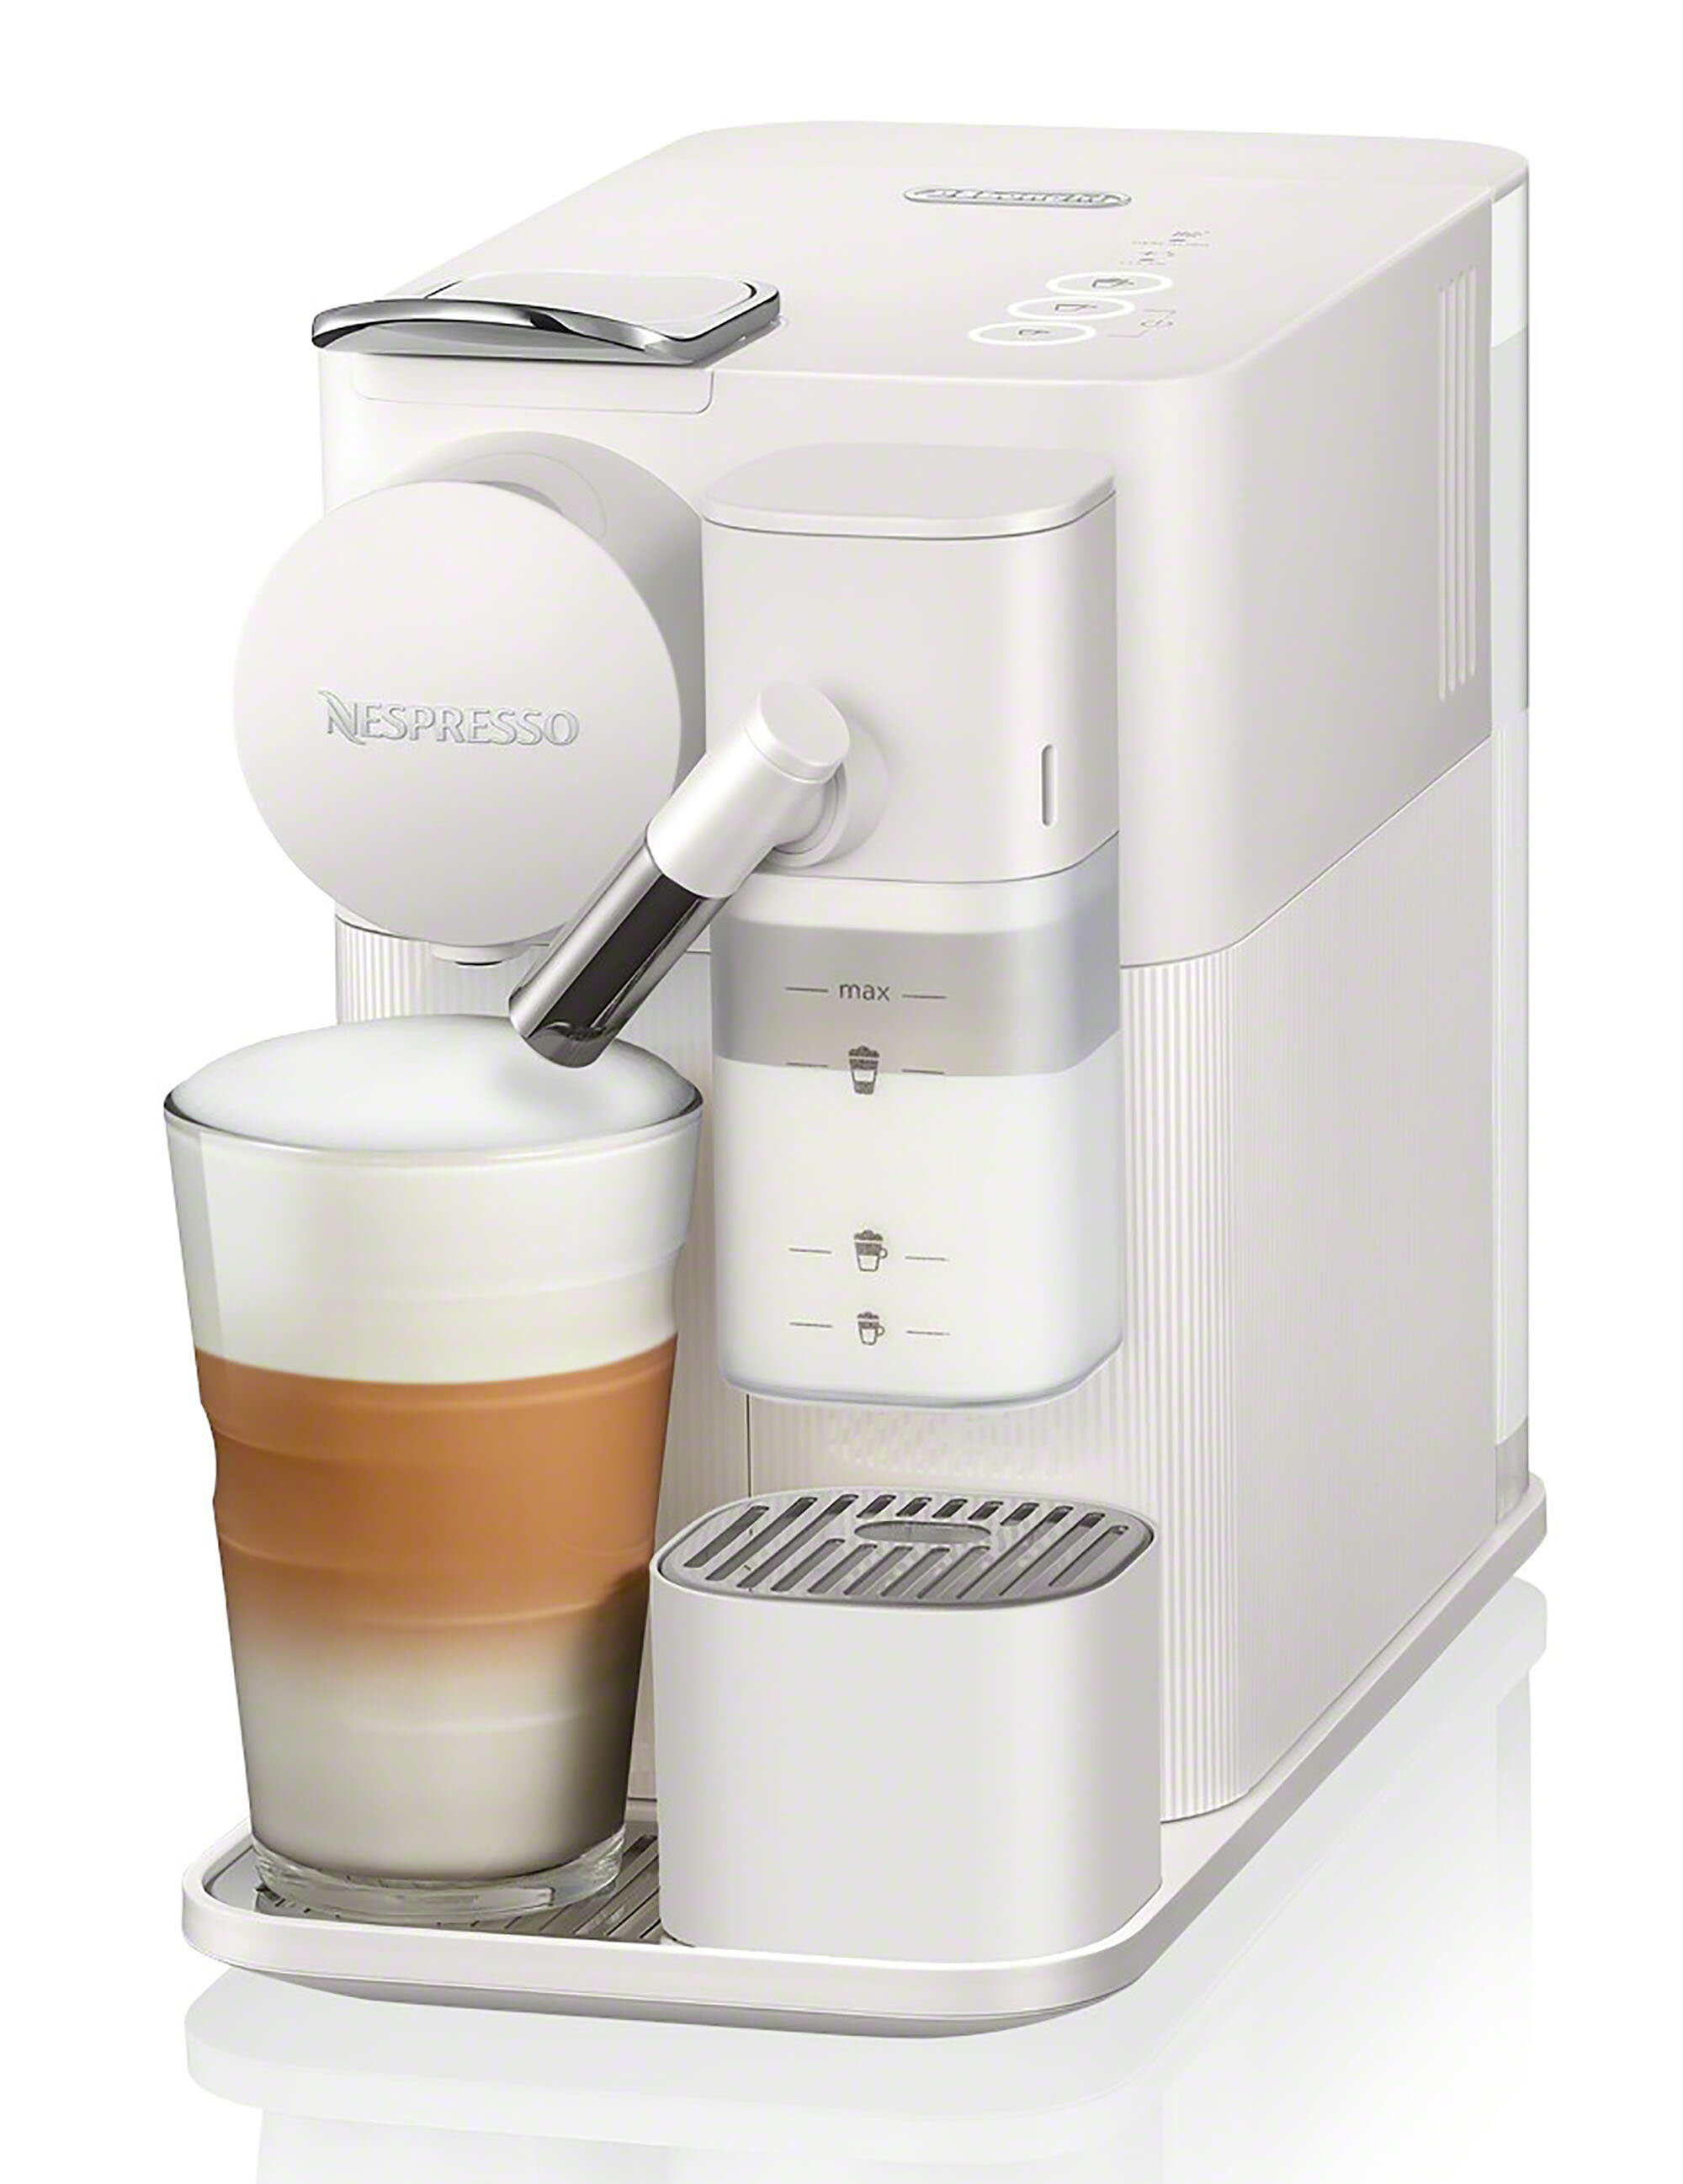 The Nespresso Lattissima One is THE coffee machine for dorms and